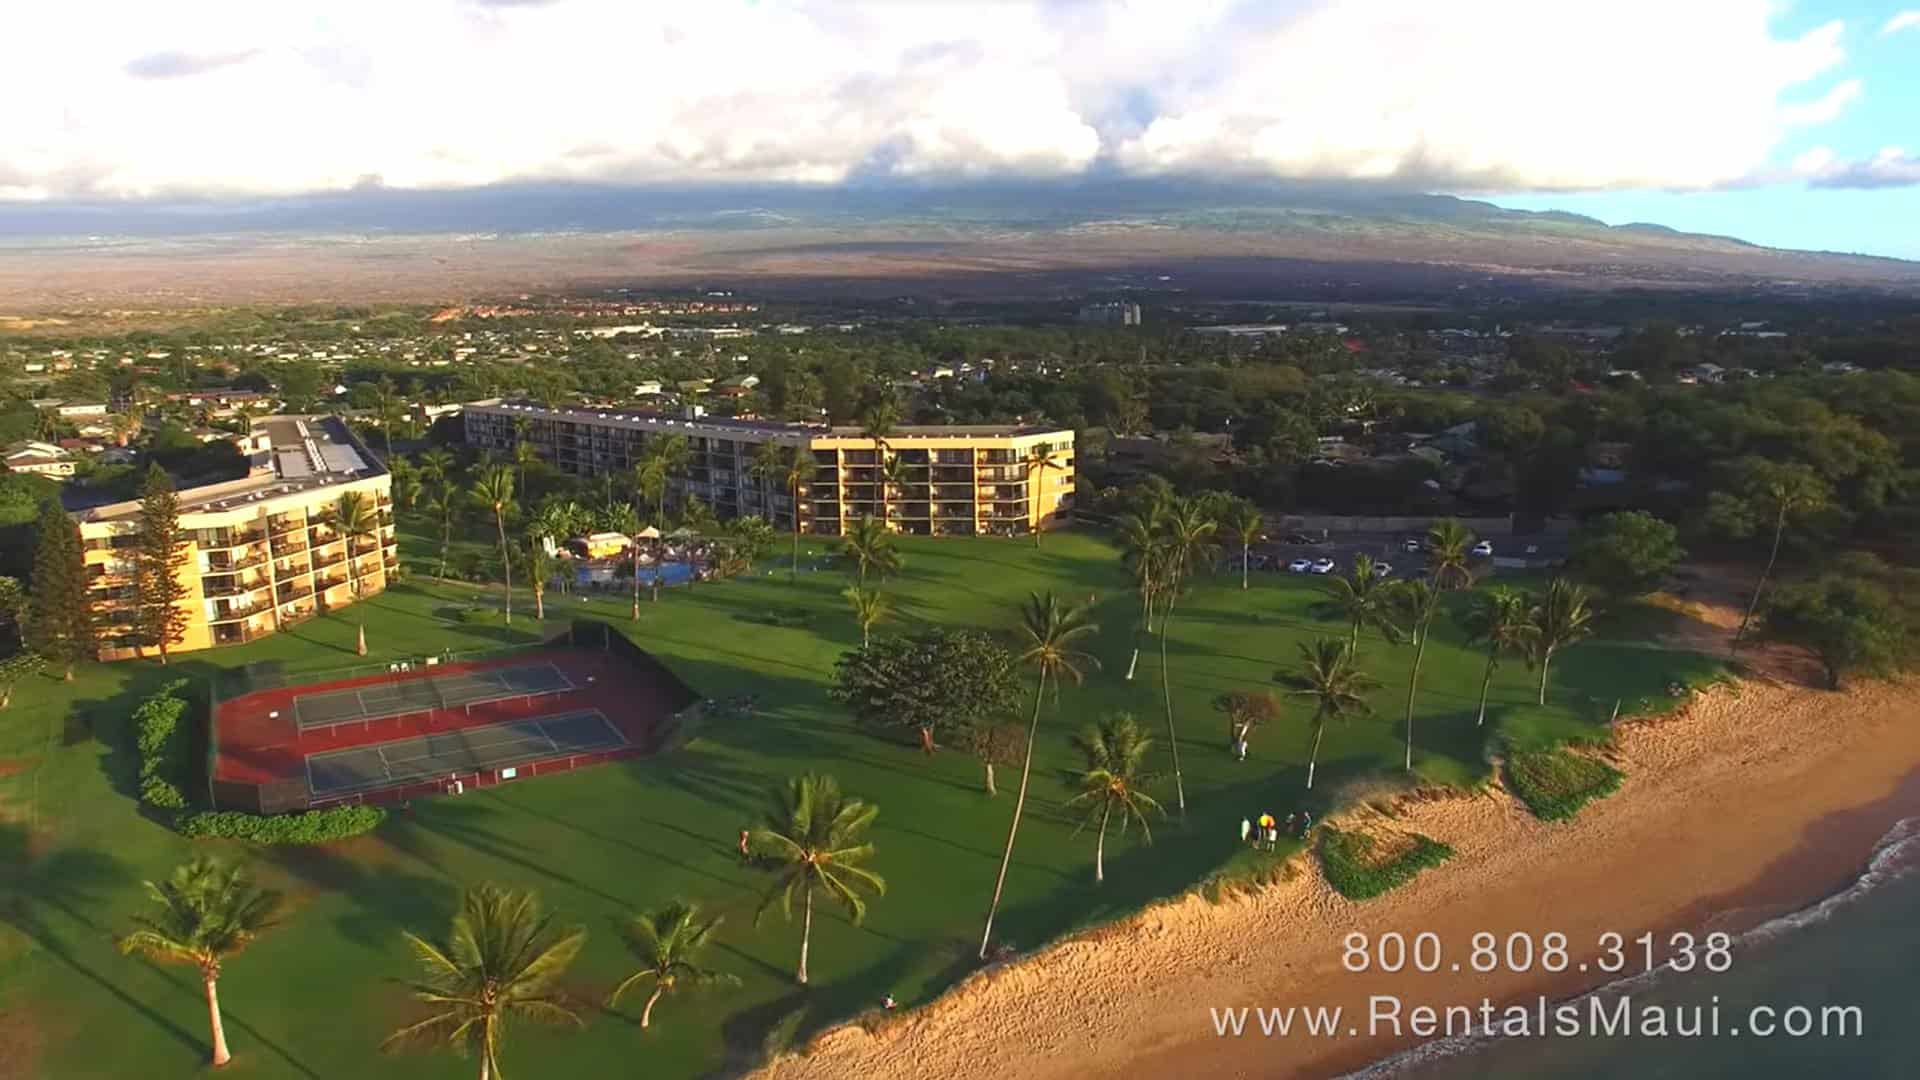 Maui Sunset Condos for Rent